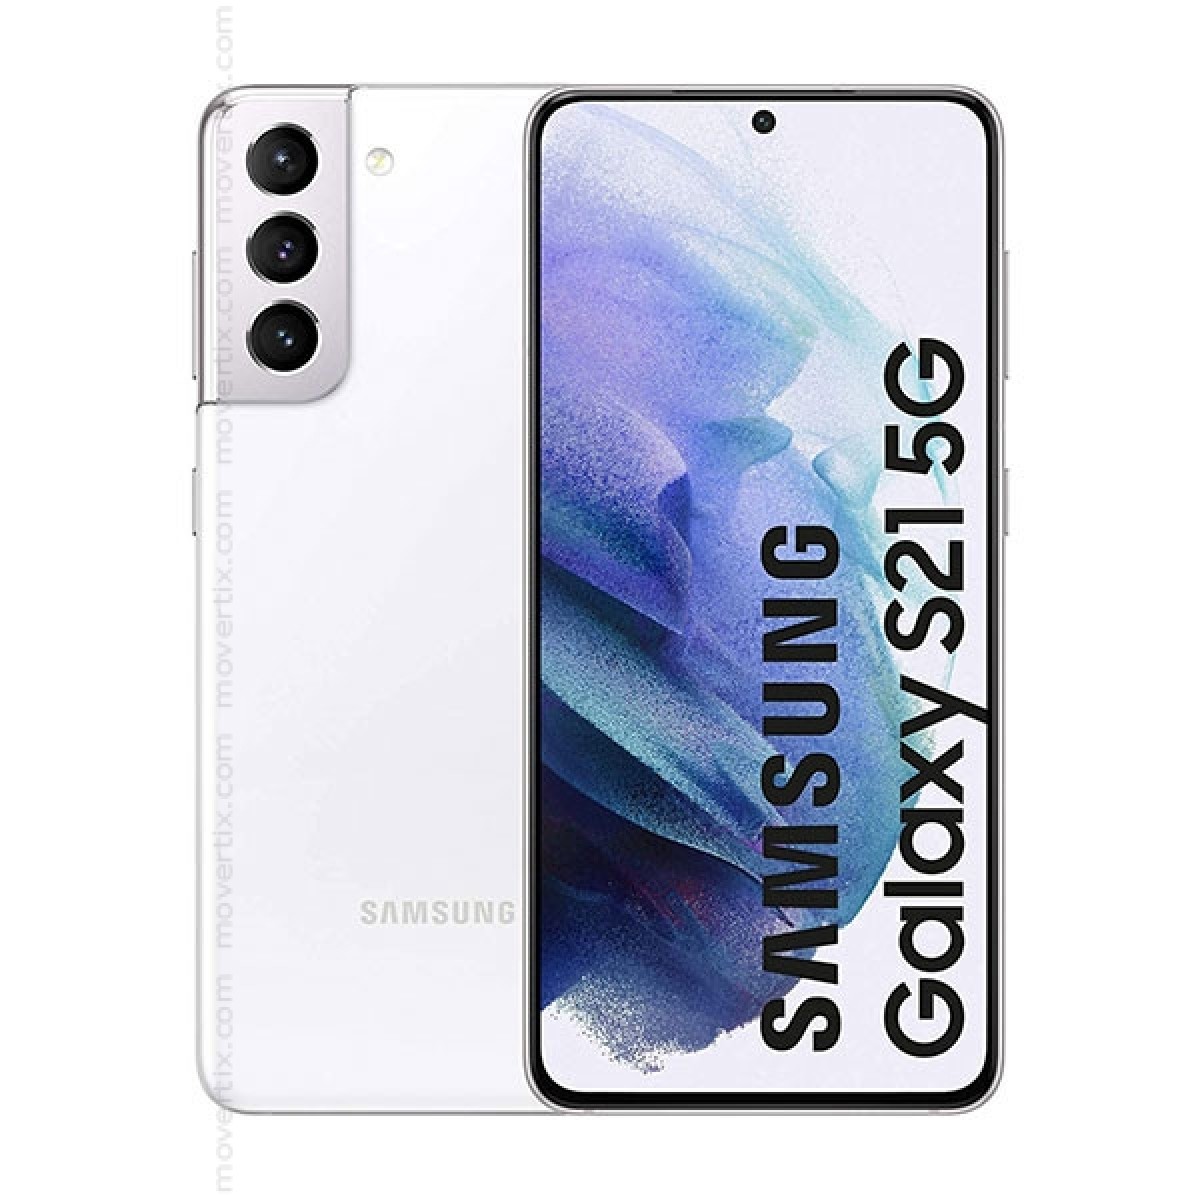 Samsung Galaxy S21 5g Phantom White 128gb And 8gb Ram Sm G991b Movertix Mobile Phones Shop